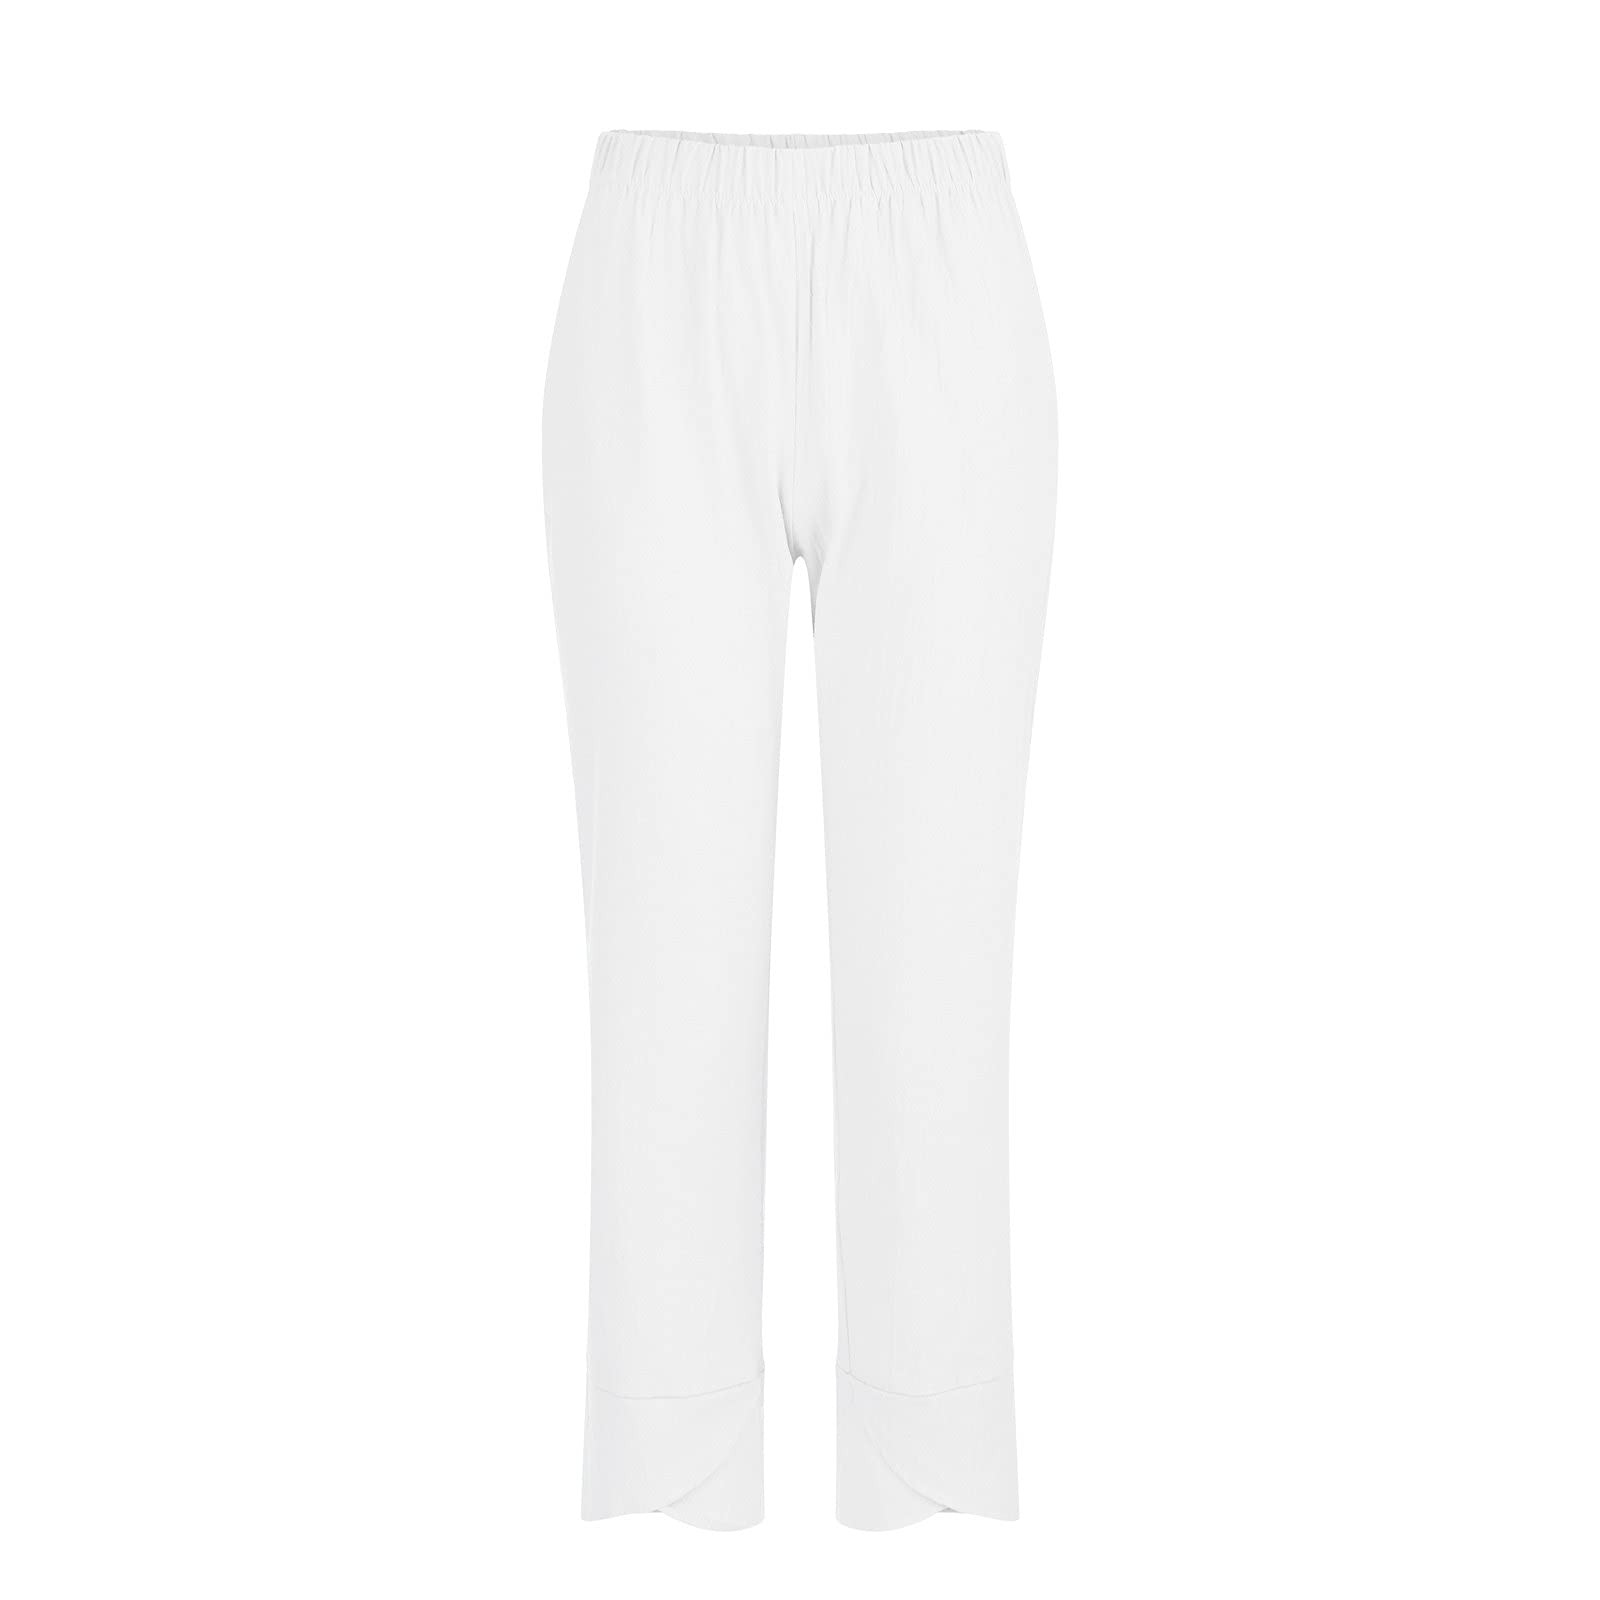 Womens Summer Linen Pants Elastic Waist Lounge Pants Tapered Capris ...